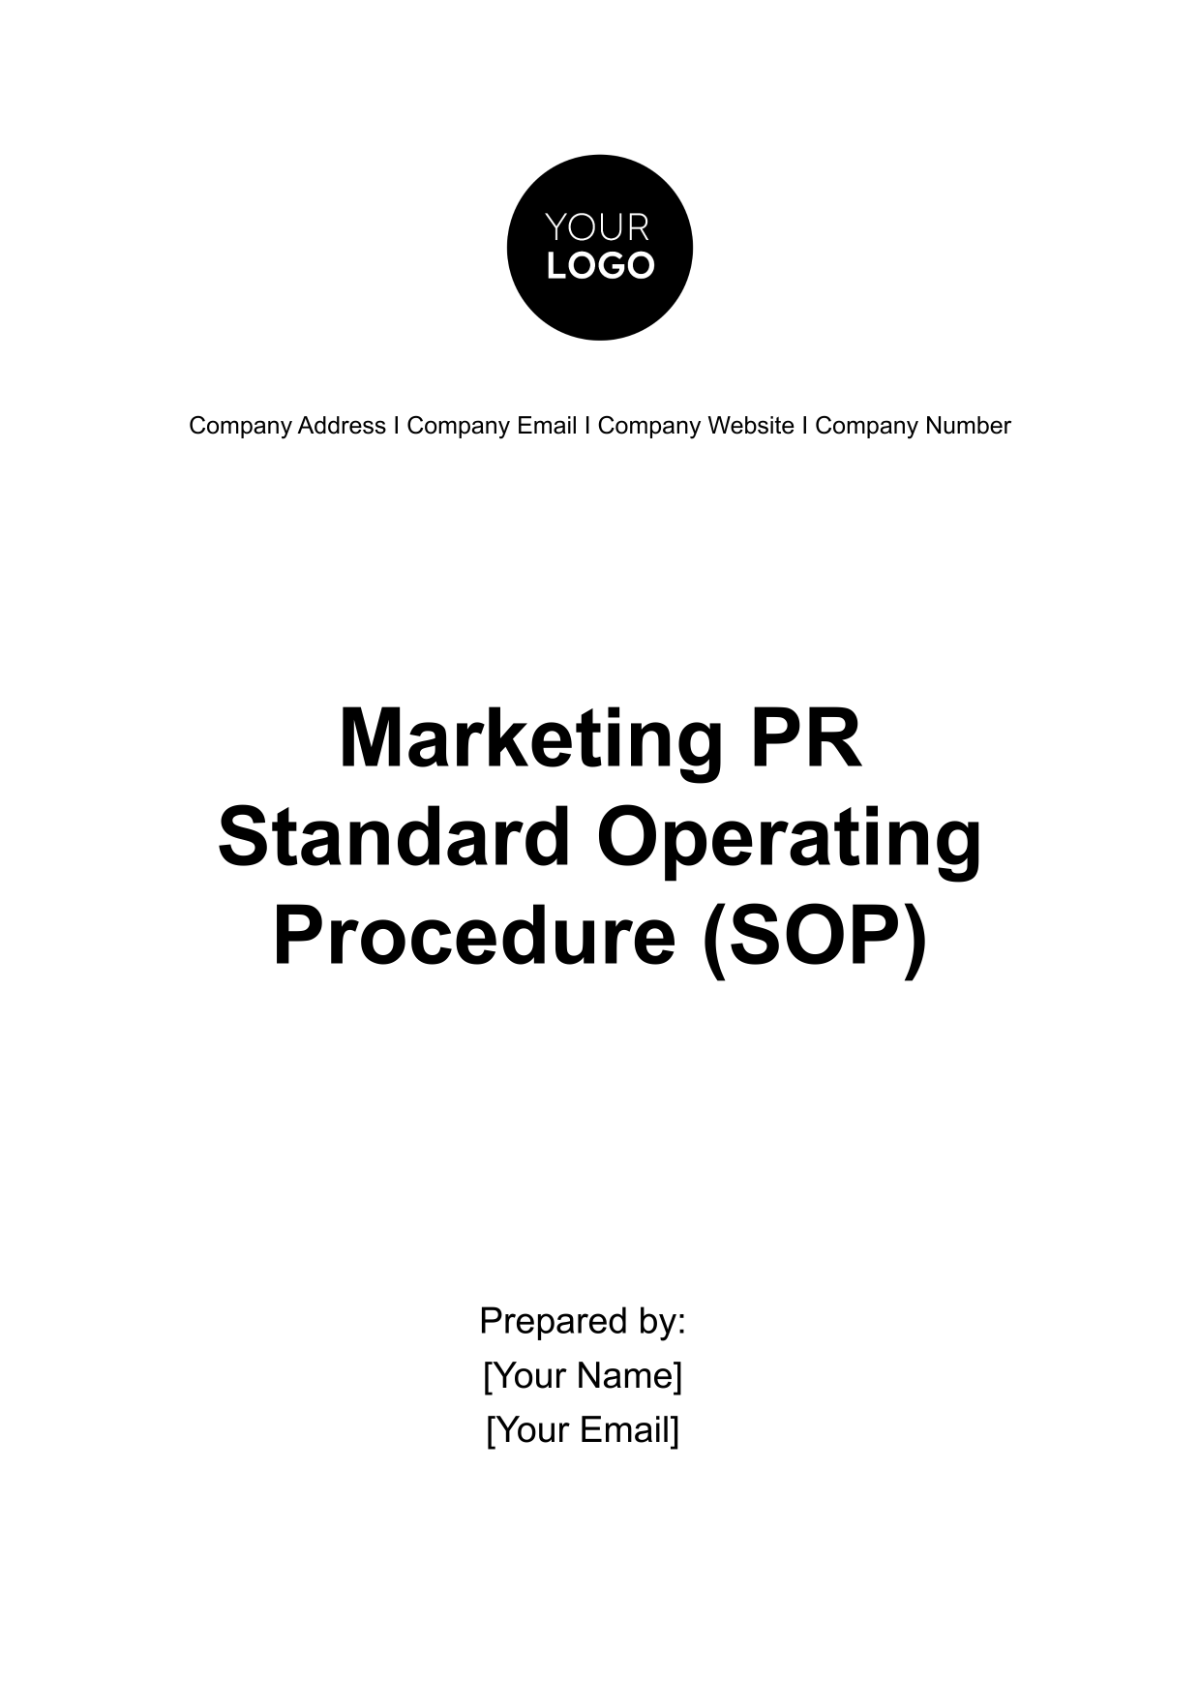 Marketing PR Standard Operating Procedure (SOP) Template